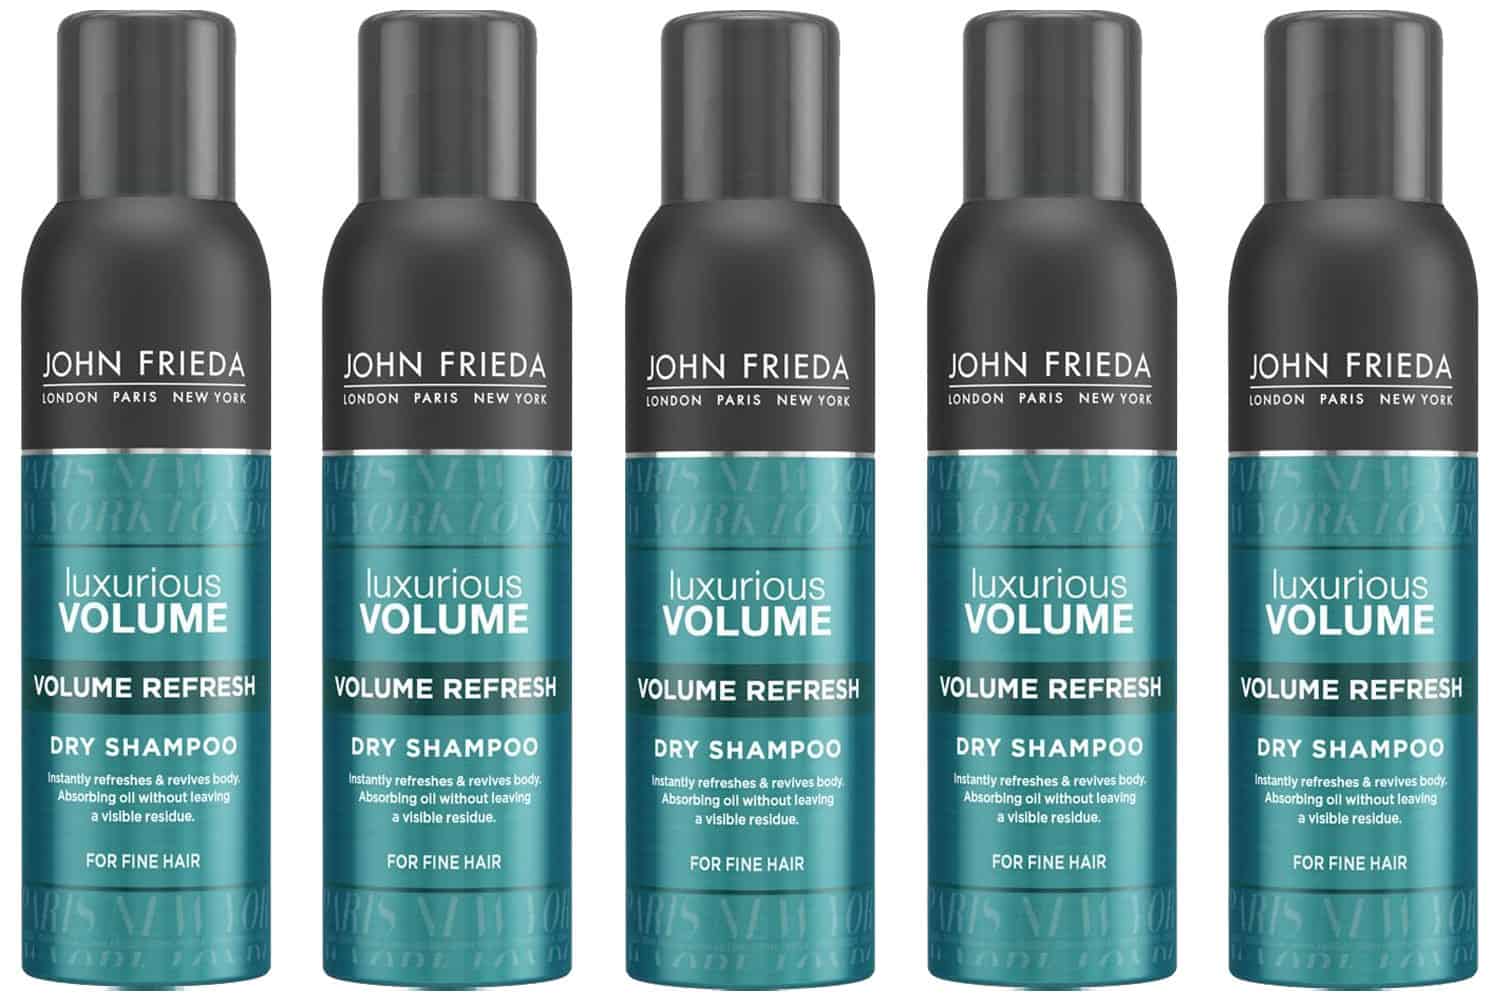 Editor's Pick: John Frieda's Luxurious Volume Dry Shampoo